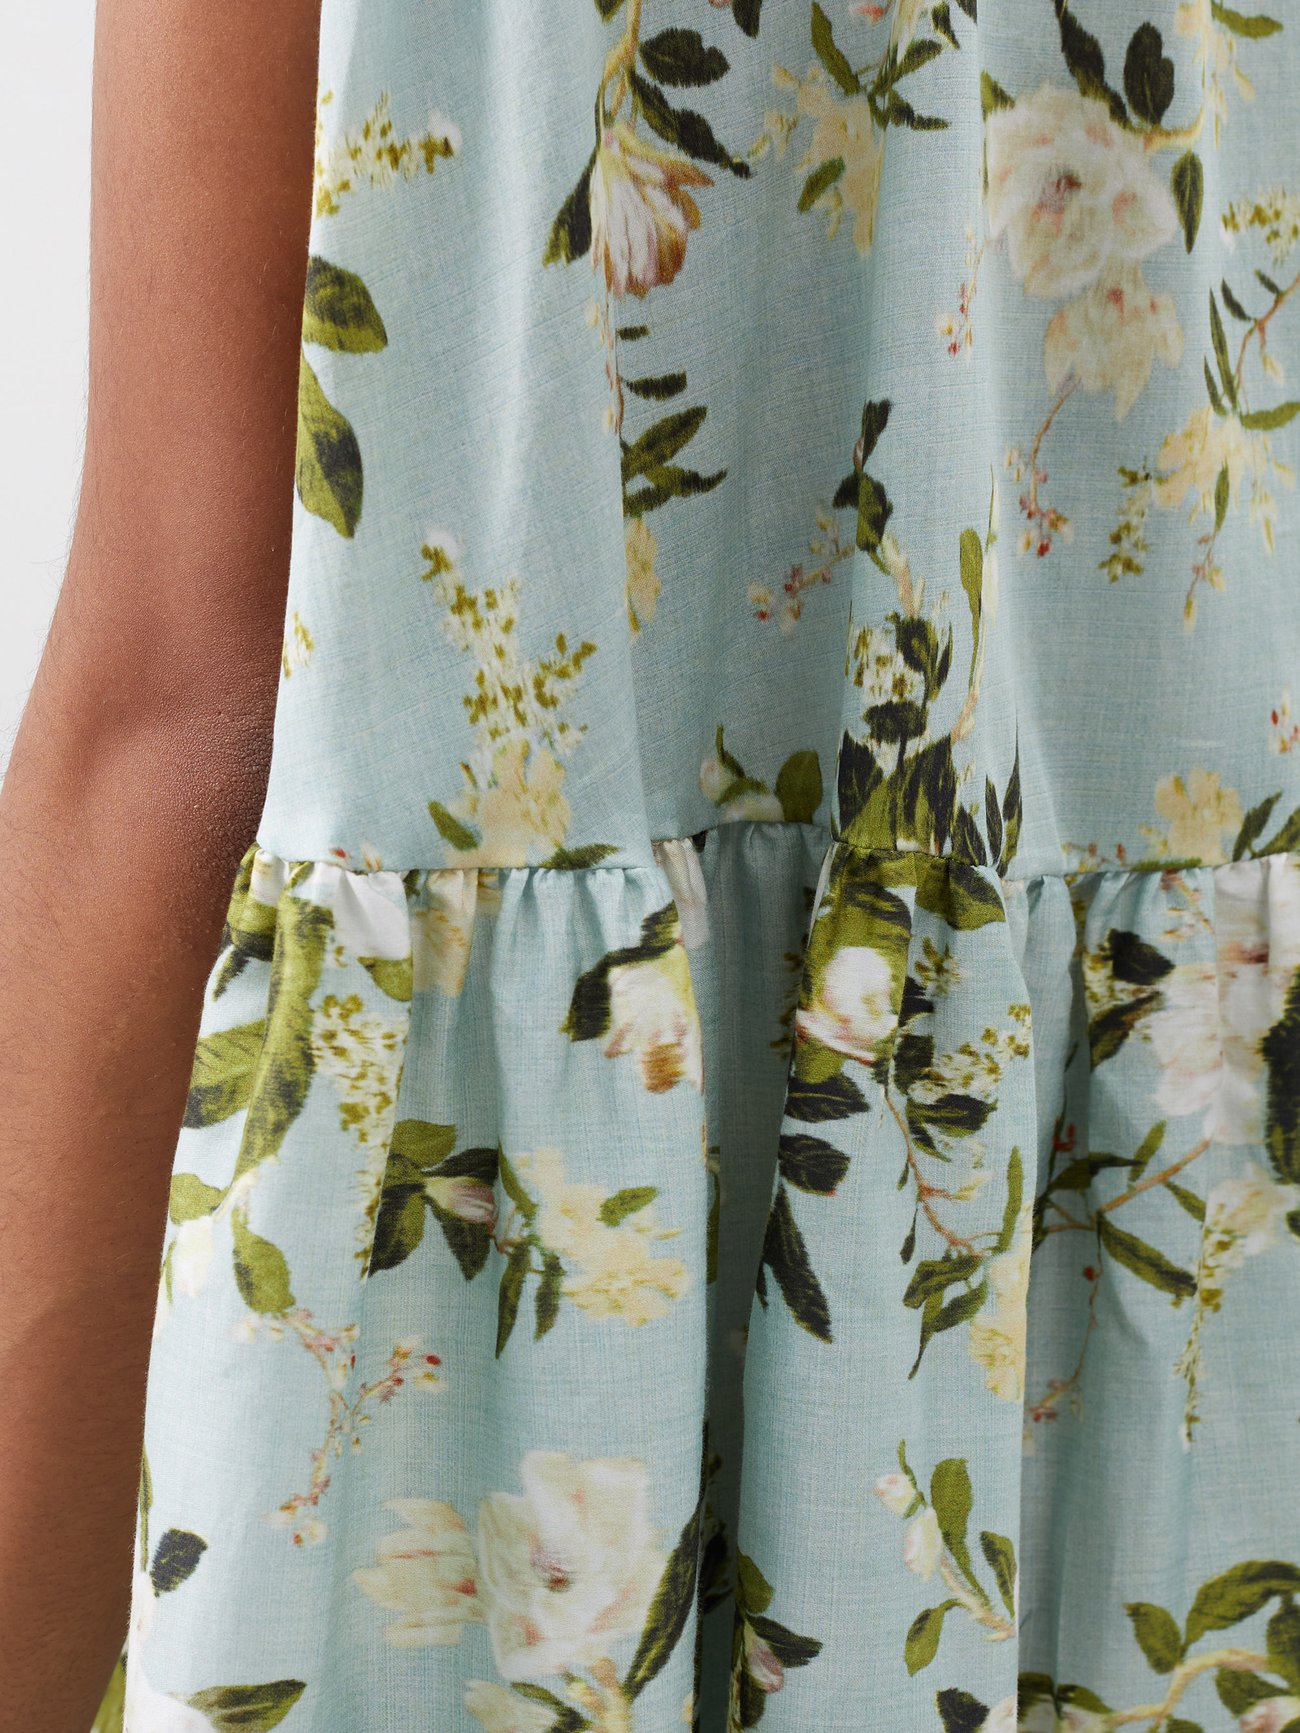 ERDEM Soleil belted floral-print cotton midi dress